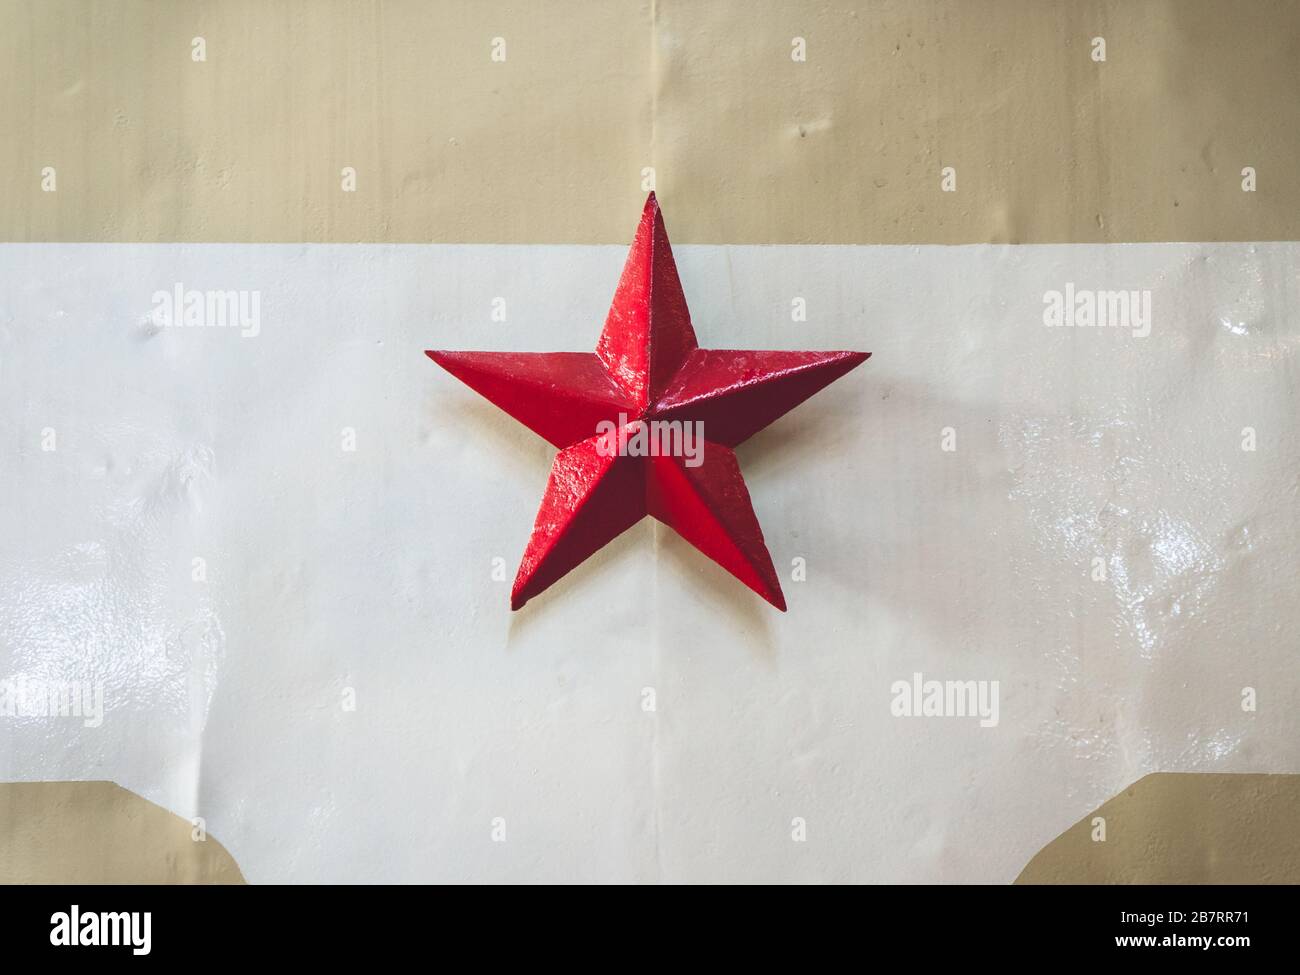 Old retro former Soviet Union red star symbol on train locomotive Stock Photo